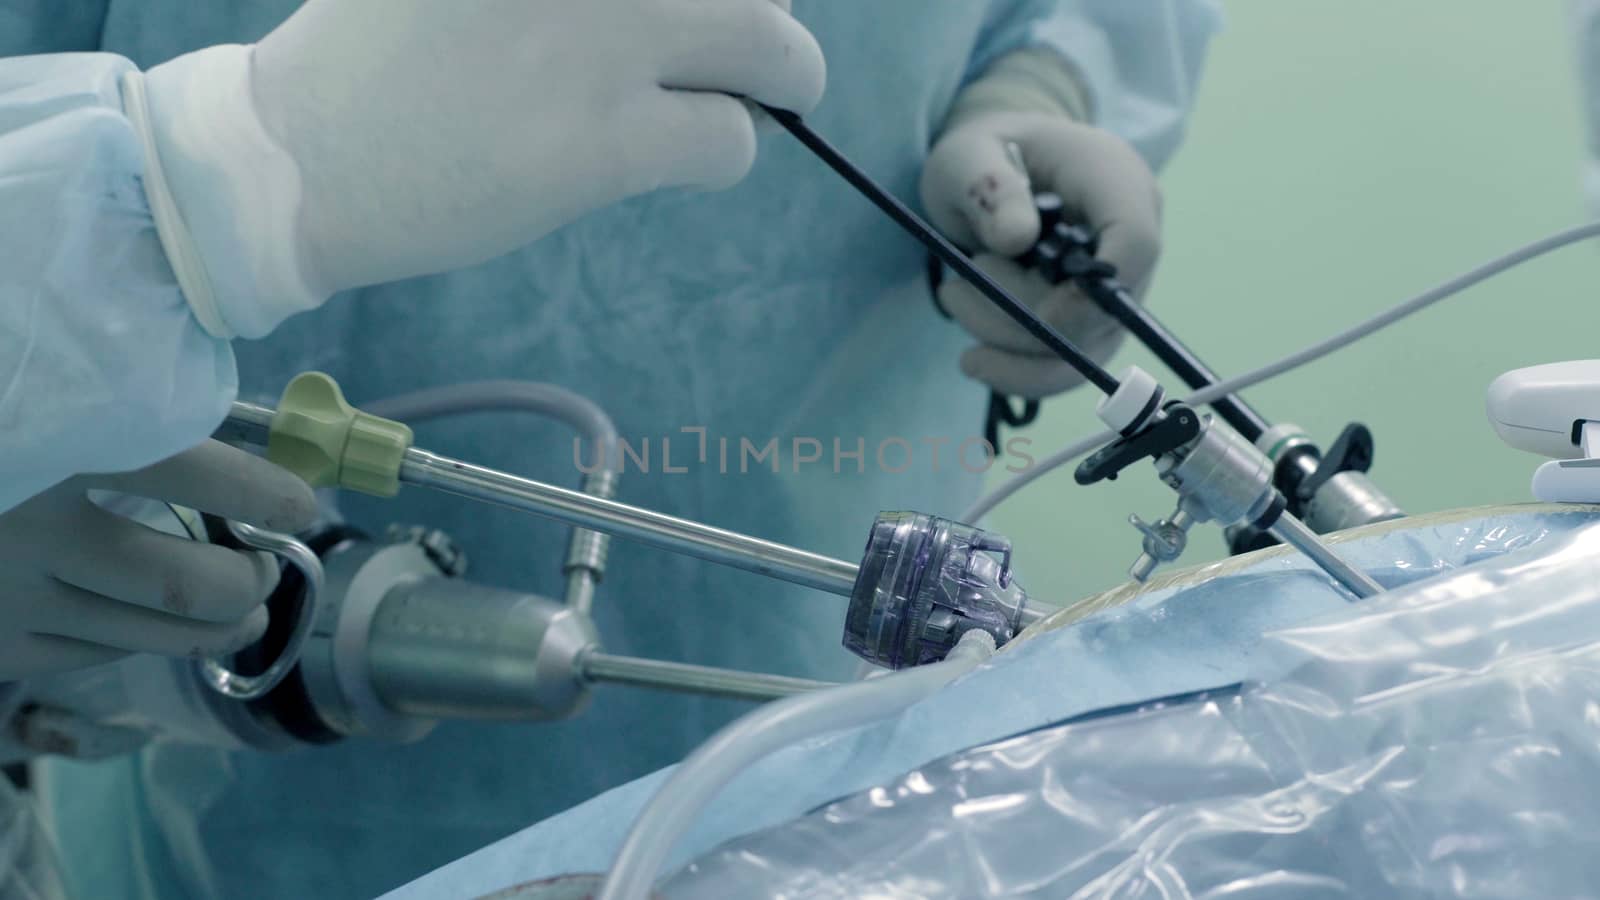 Laparoscopic surgery of the abdomen. The team of medical specialists conducting laparoscopic surgery.